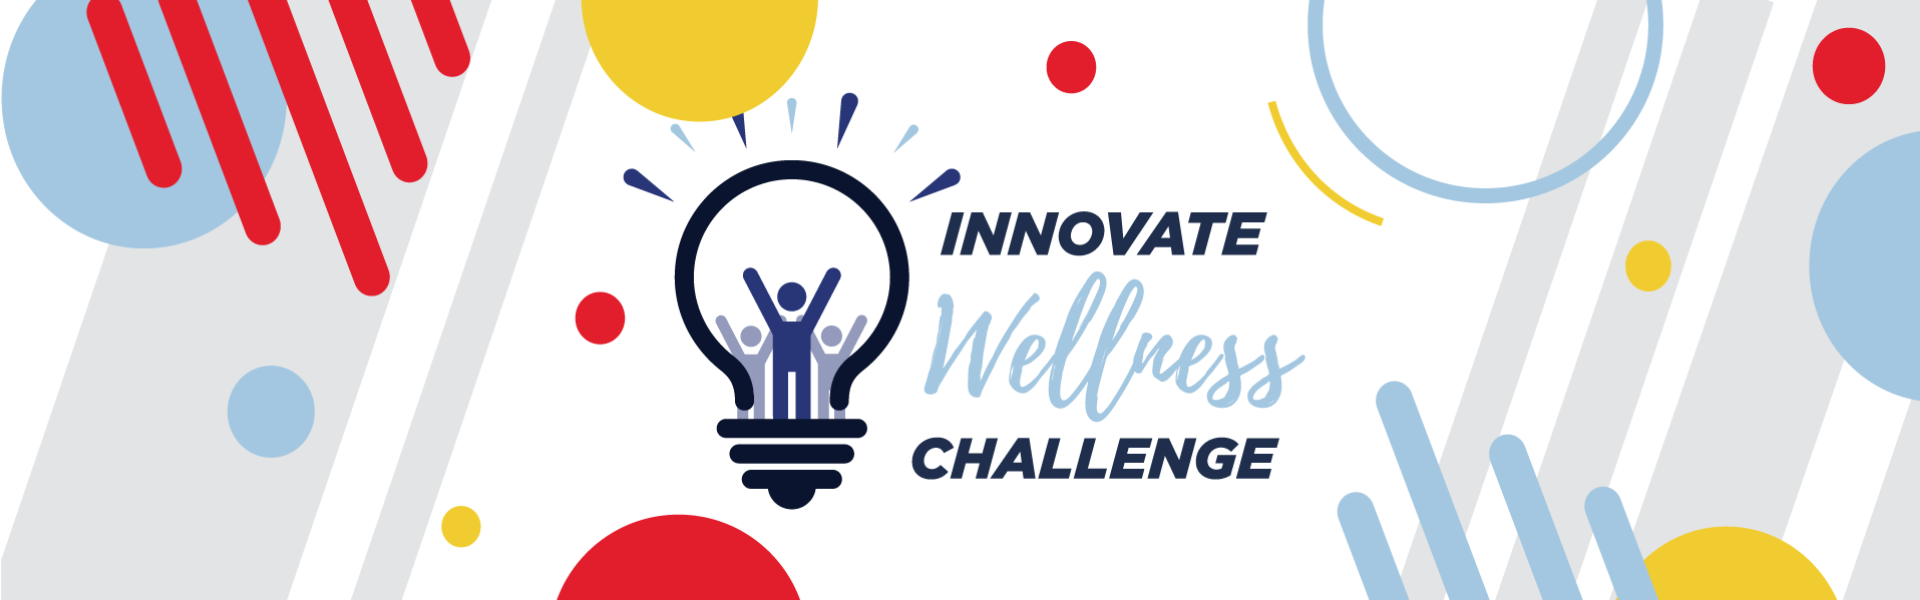 Innovate Wellness Challenge Banner